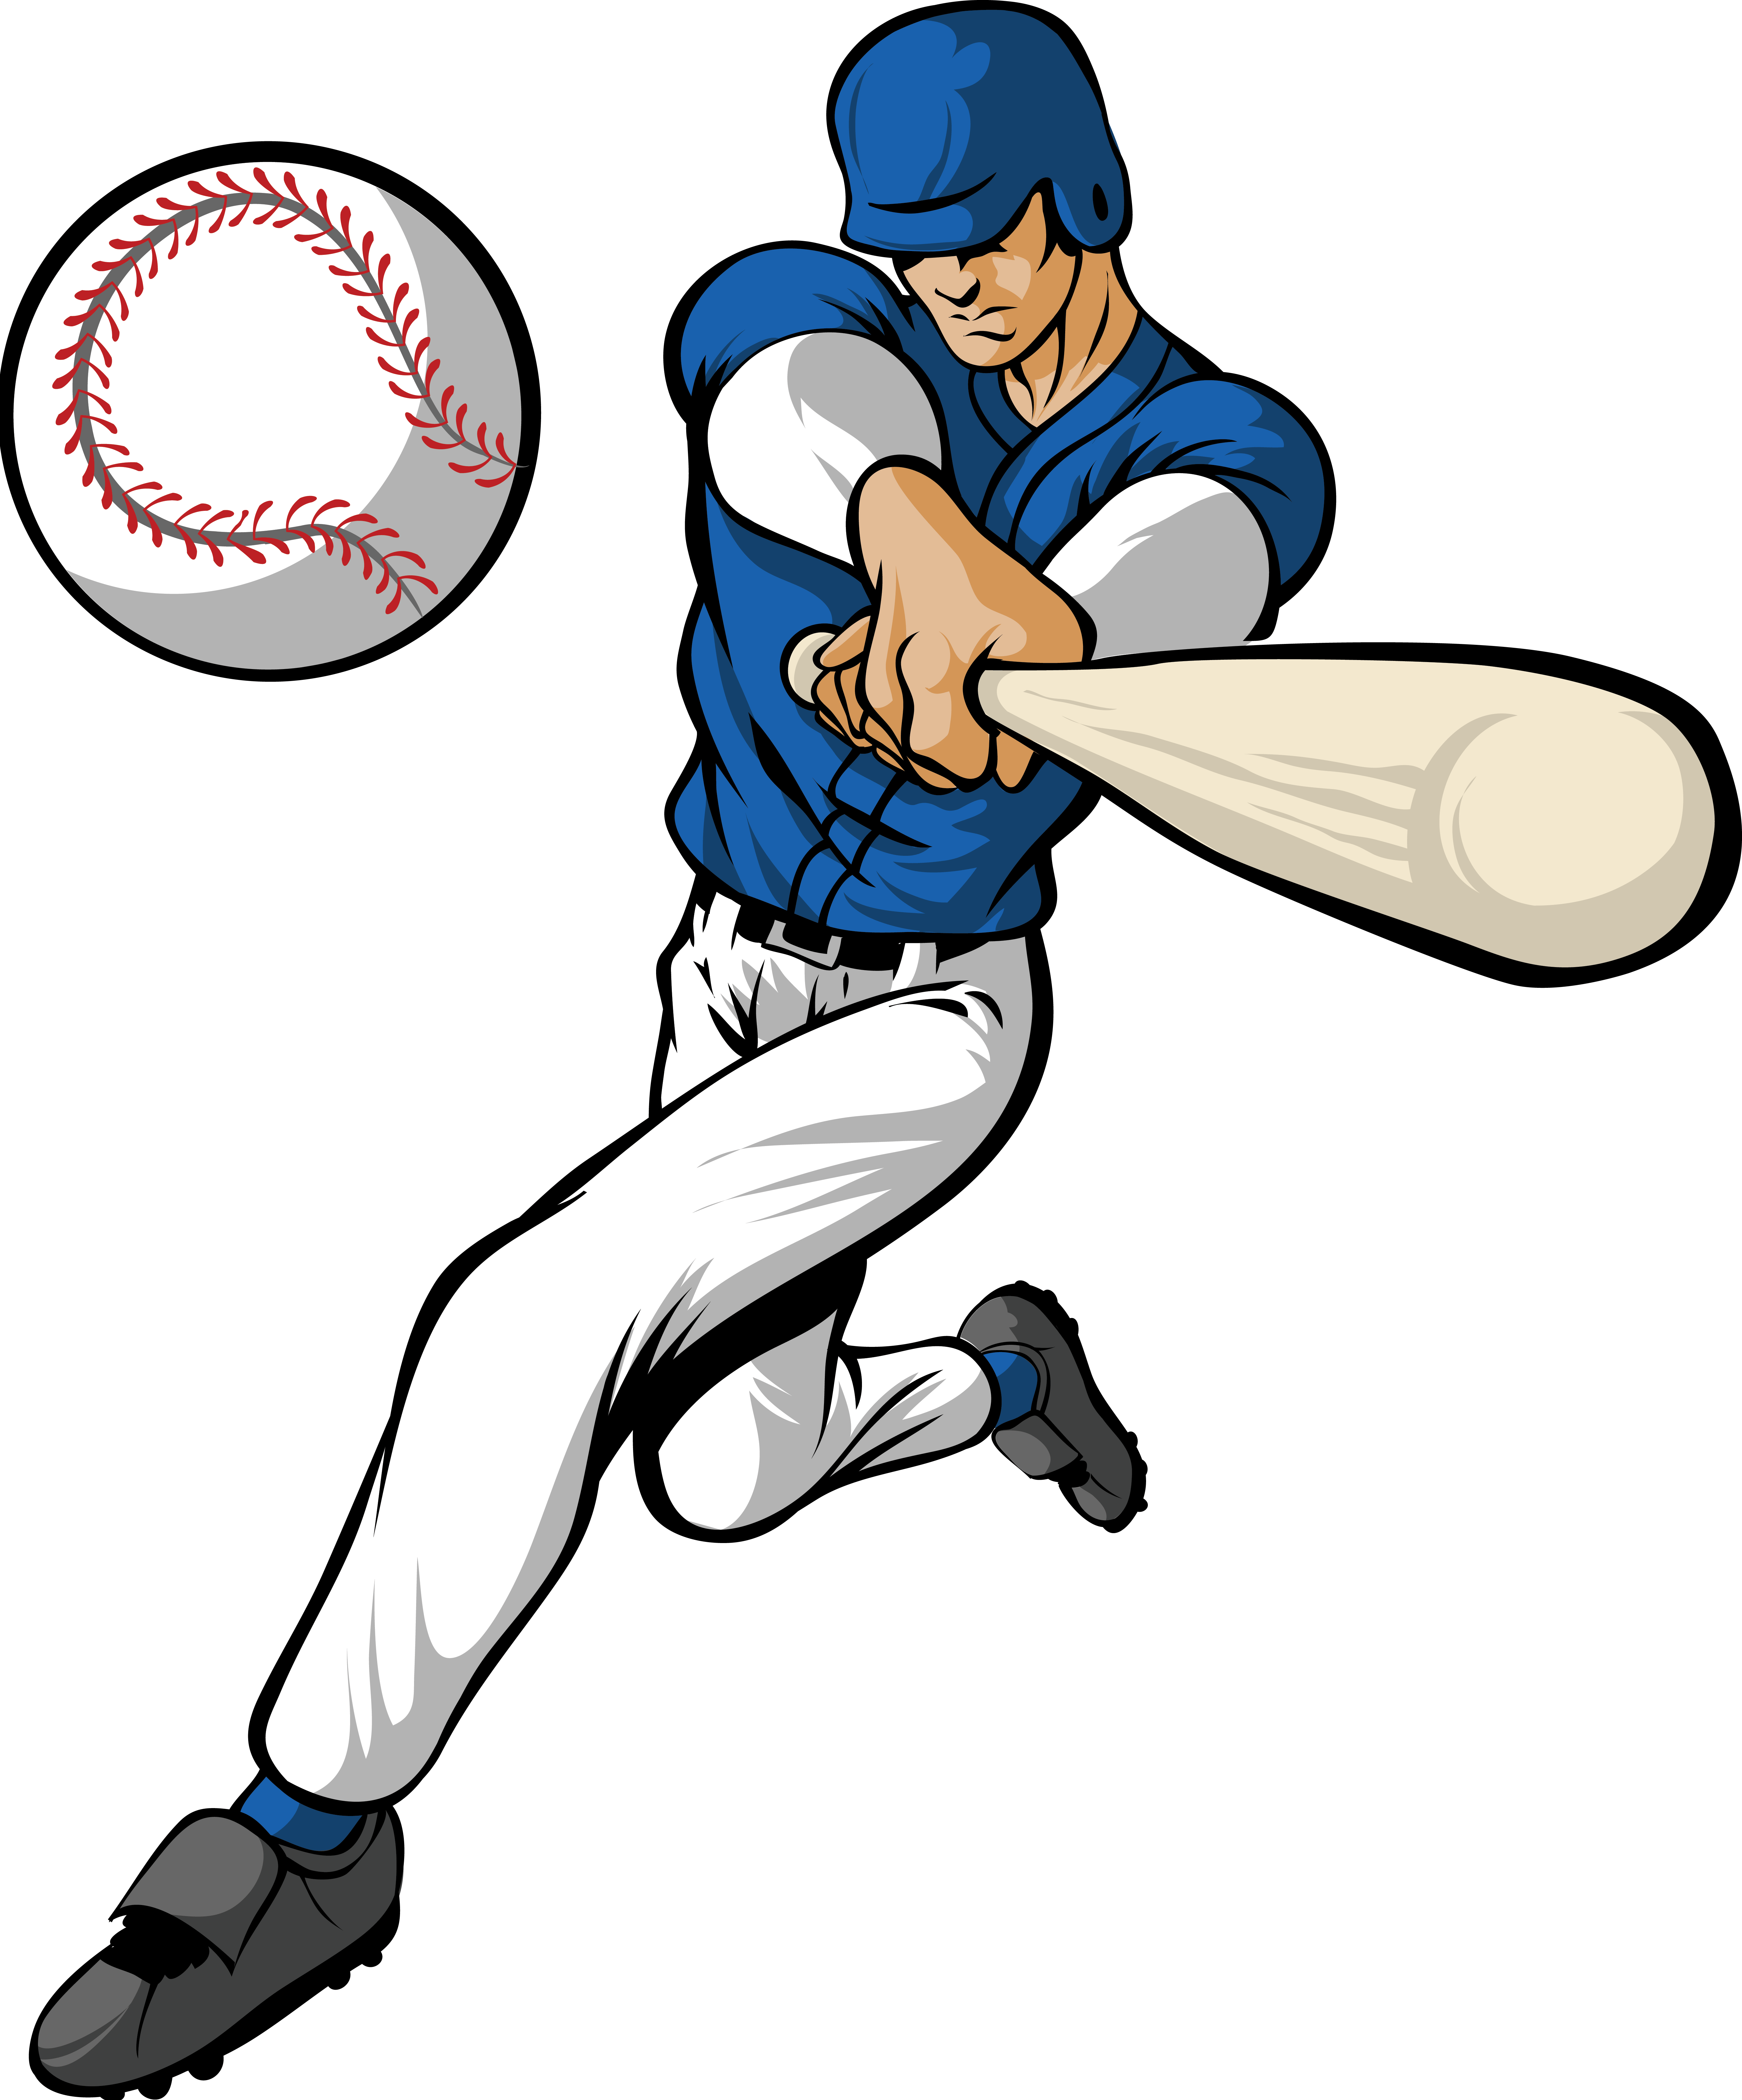 Free Baseball Cartoon, Download Free Baseball Cartoon png images, Free